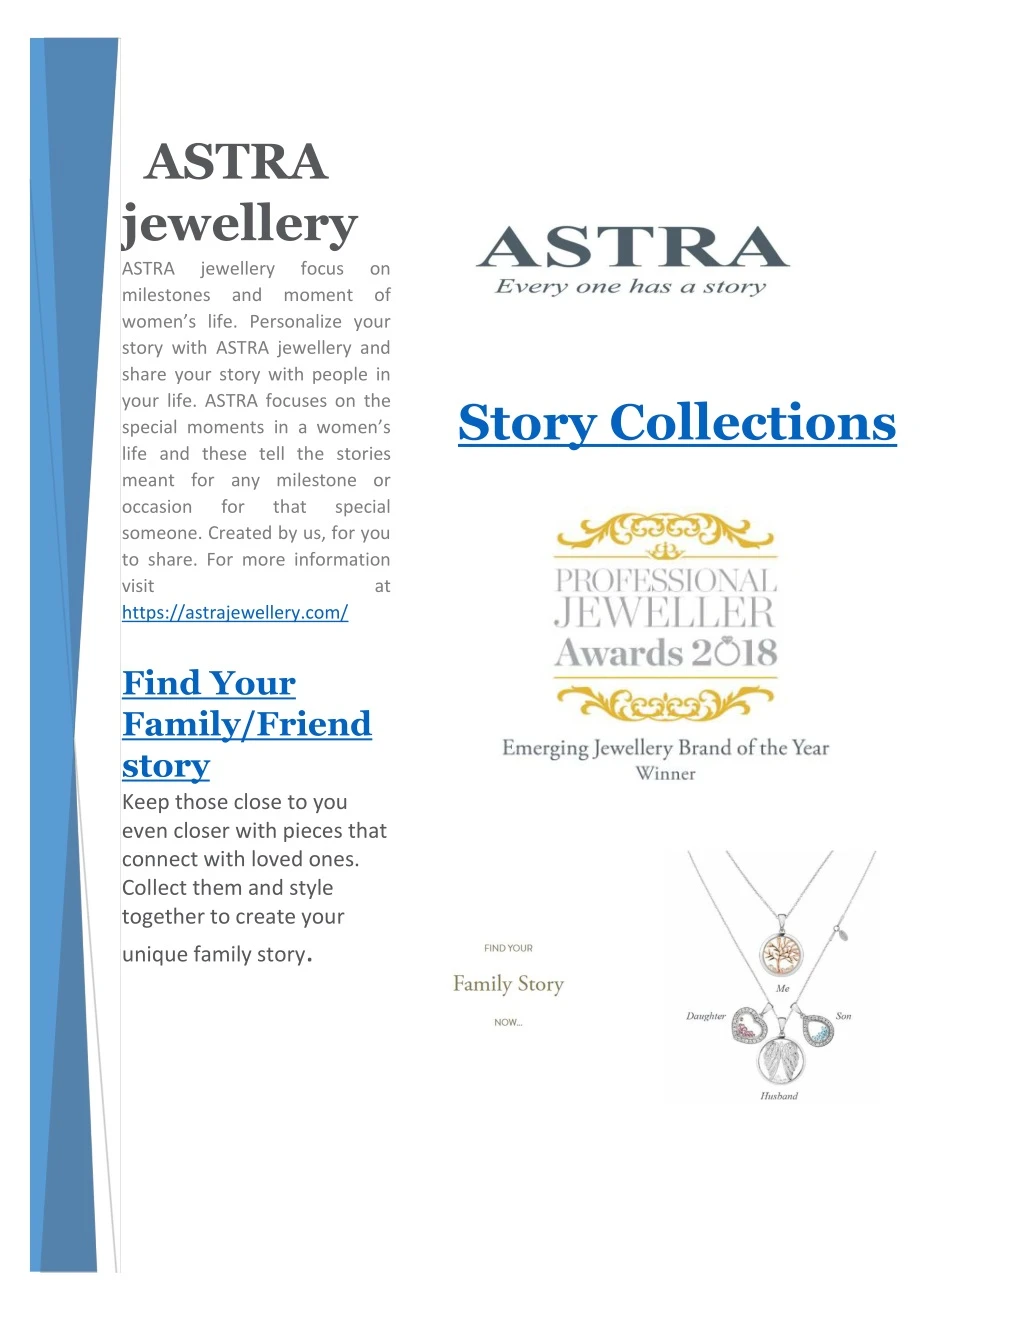 astra jewellery astra jewellery milestones